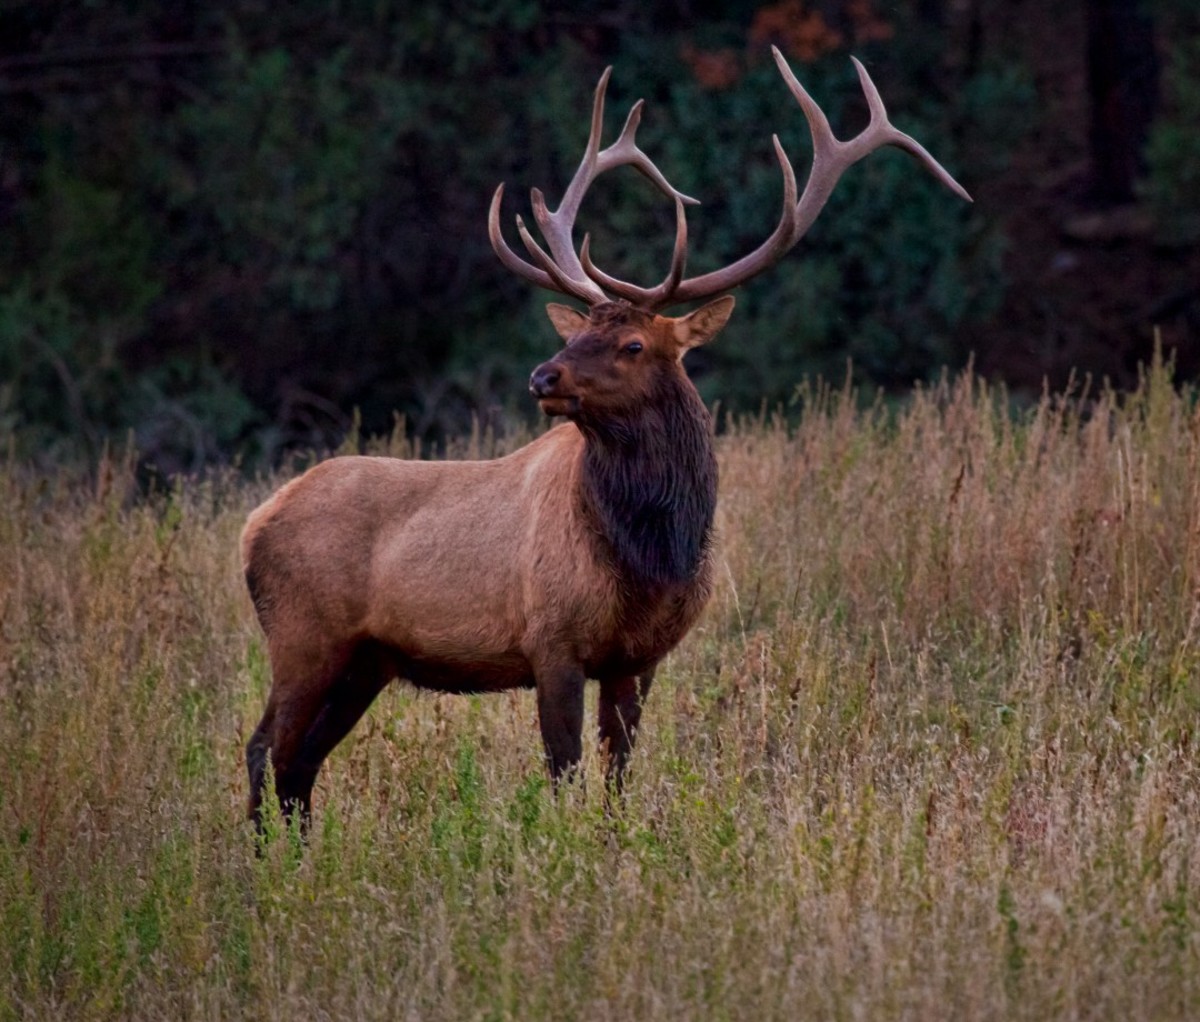 Bull elk standing in field